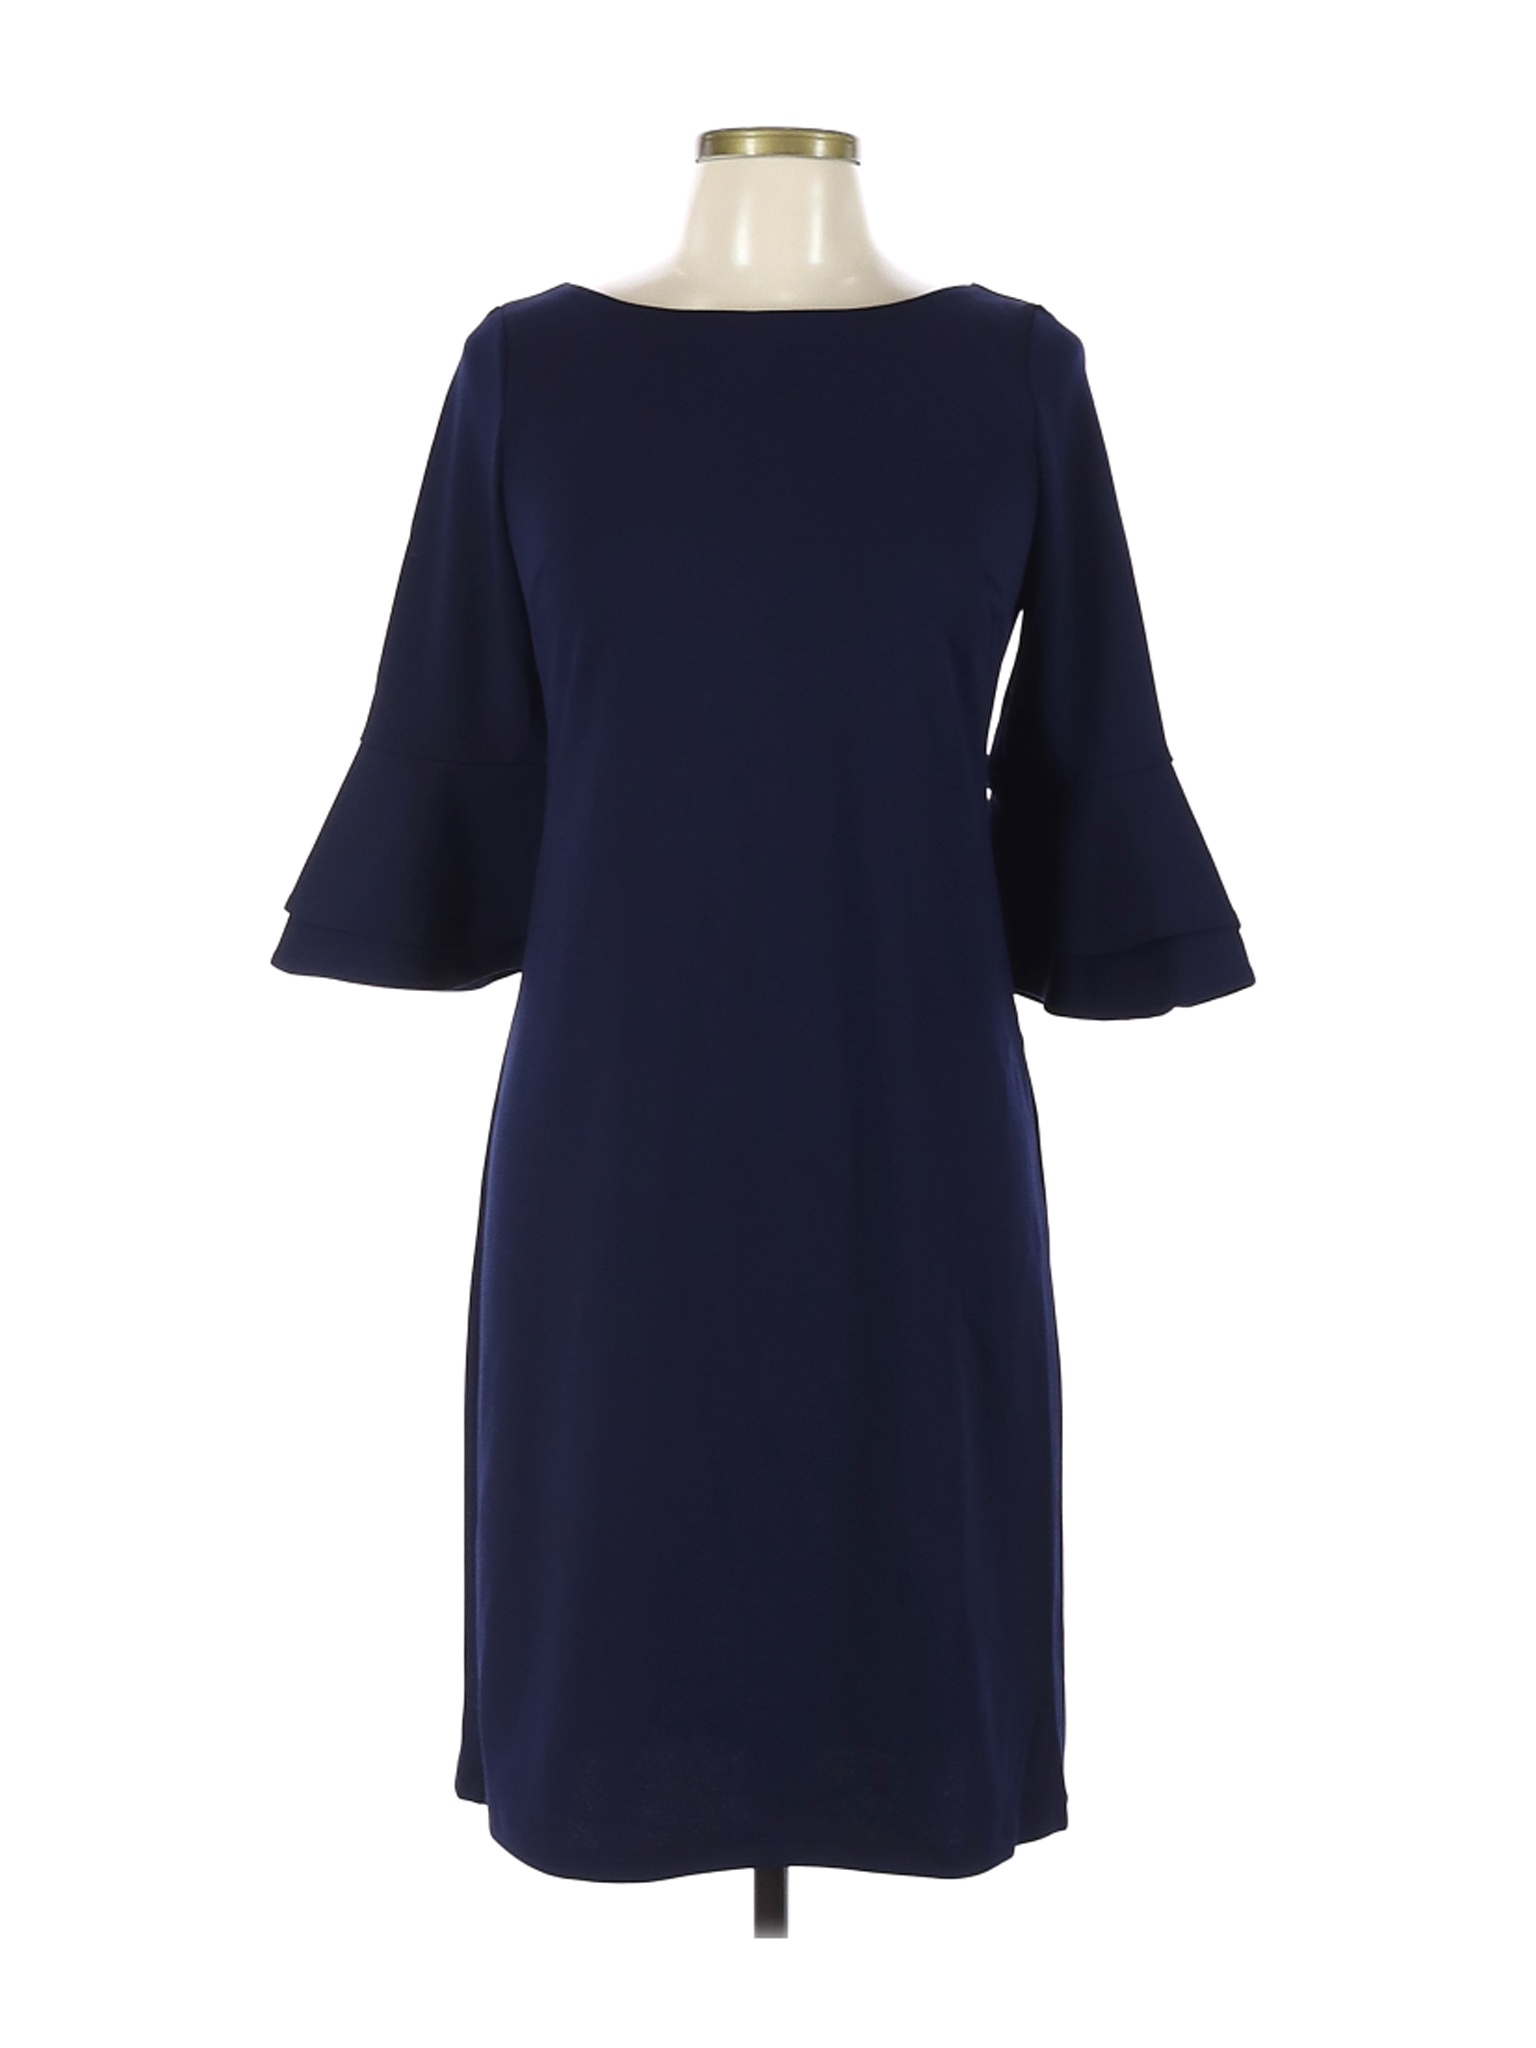 I LE New York Women Blue Casual Dress 6 | eBay